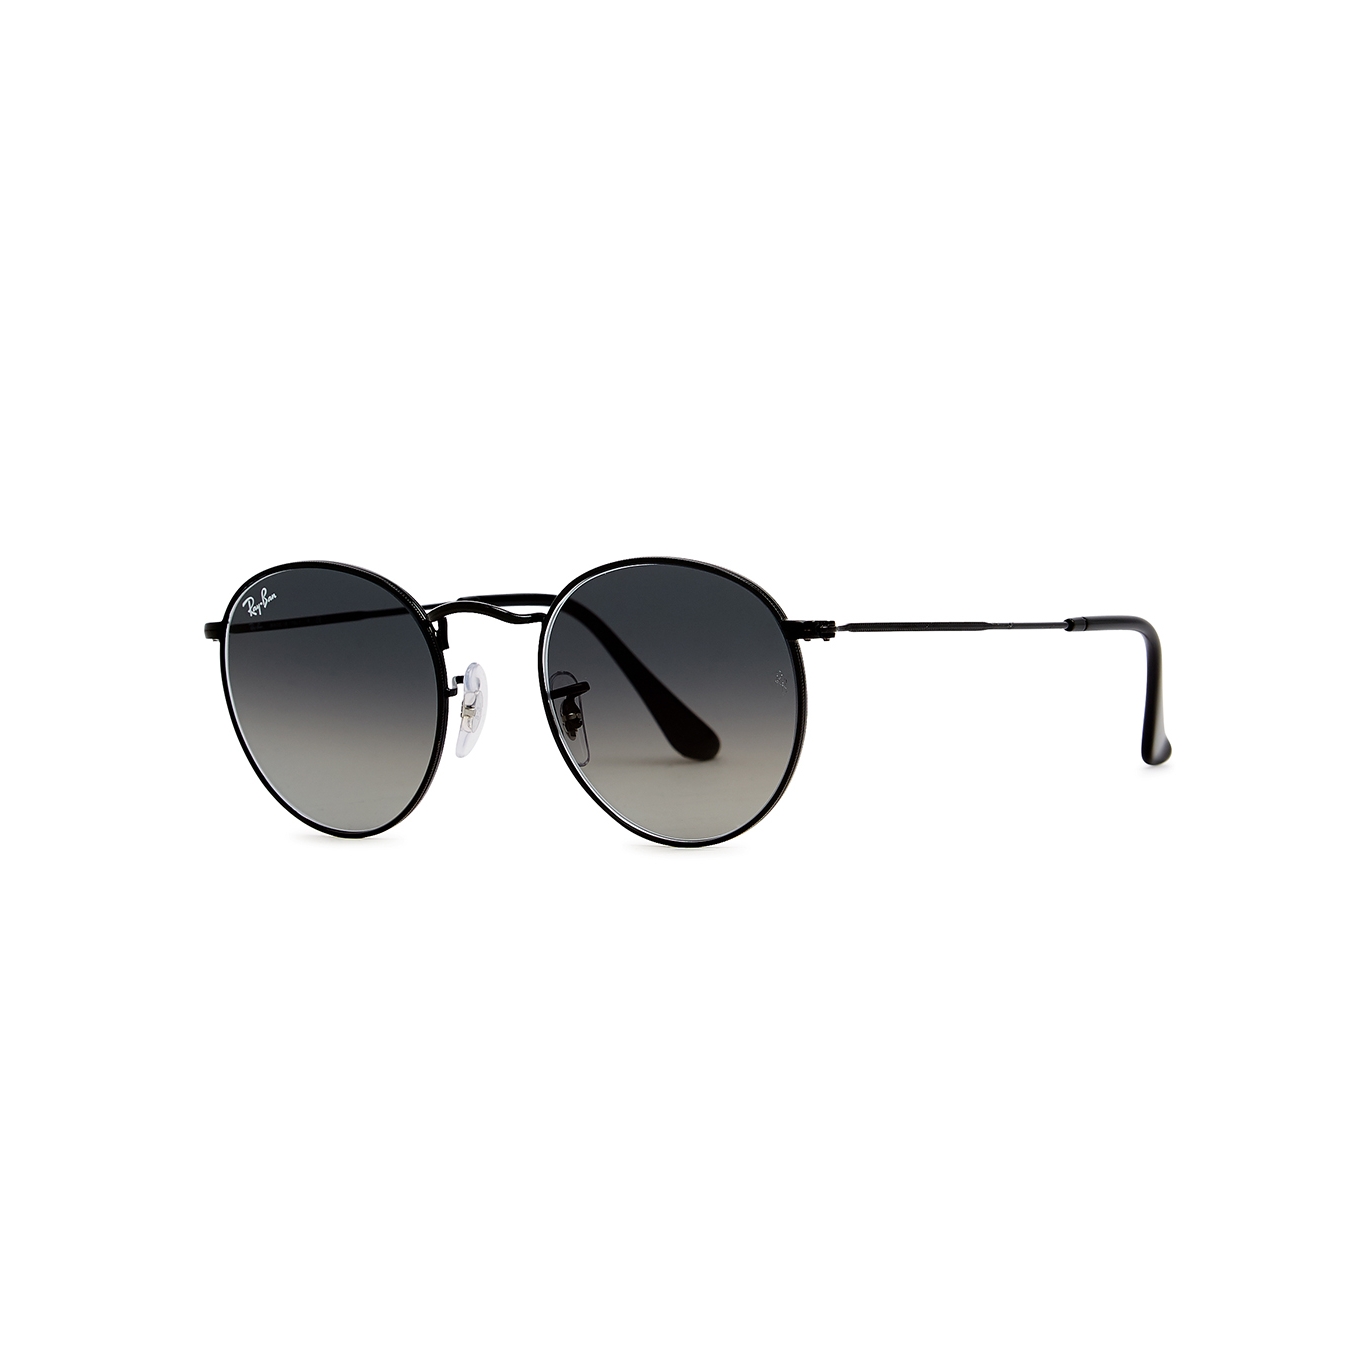 Ray-Ban Black Round-frame Sunglasses, Sunglasses, Charcoal Lenses